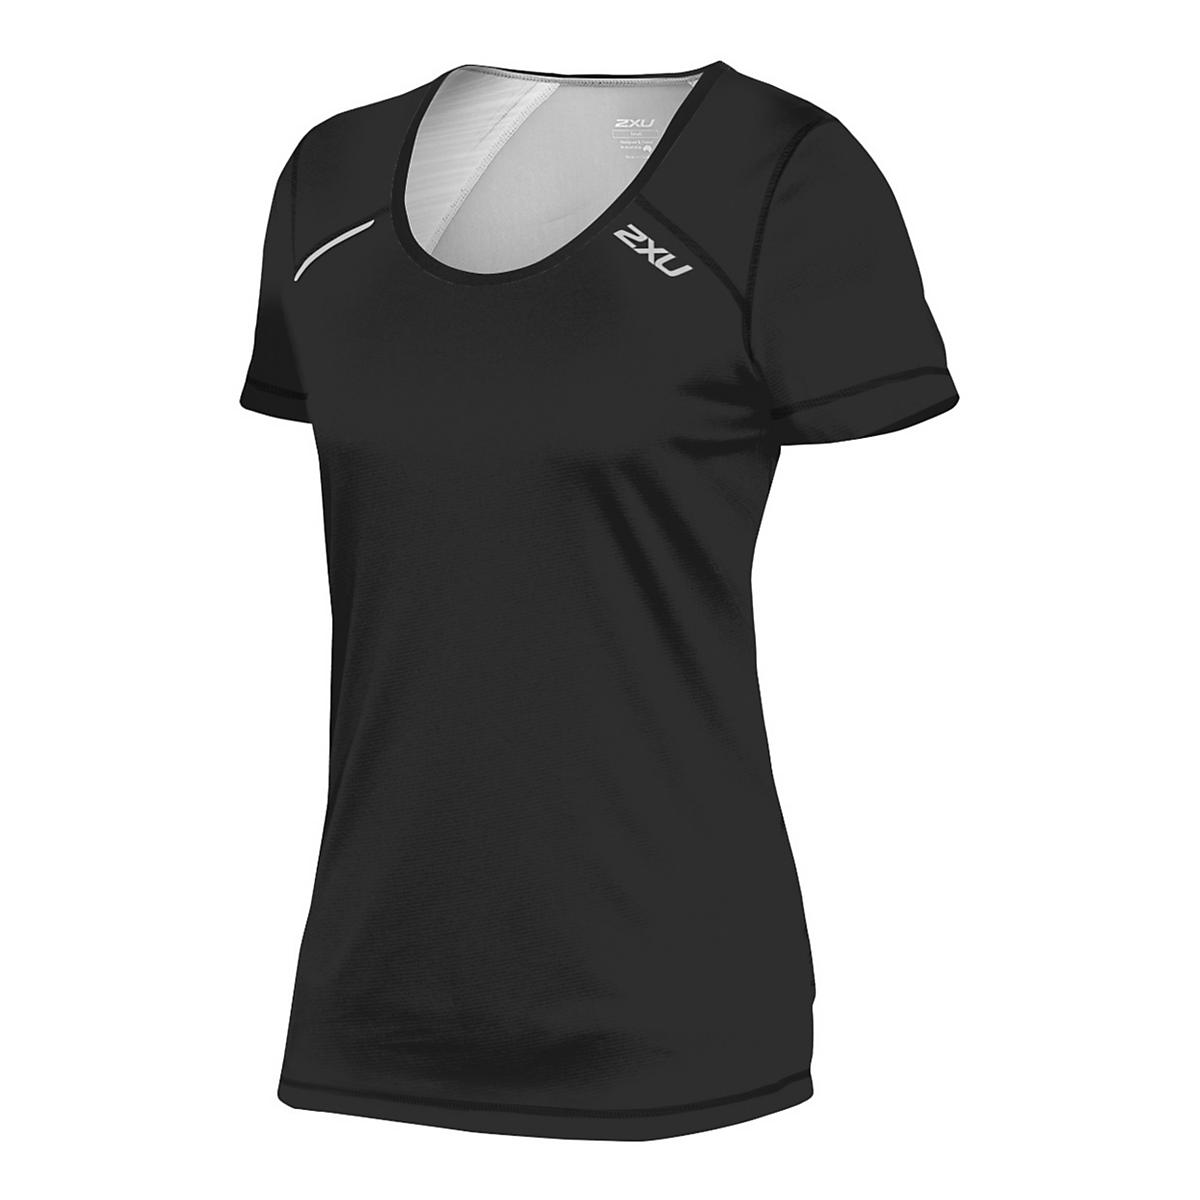 Womens Nike Tailwind V Neck Short Sleeve Technical Tops at Road Runner ...